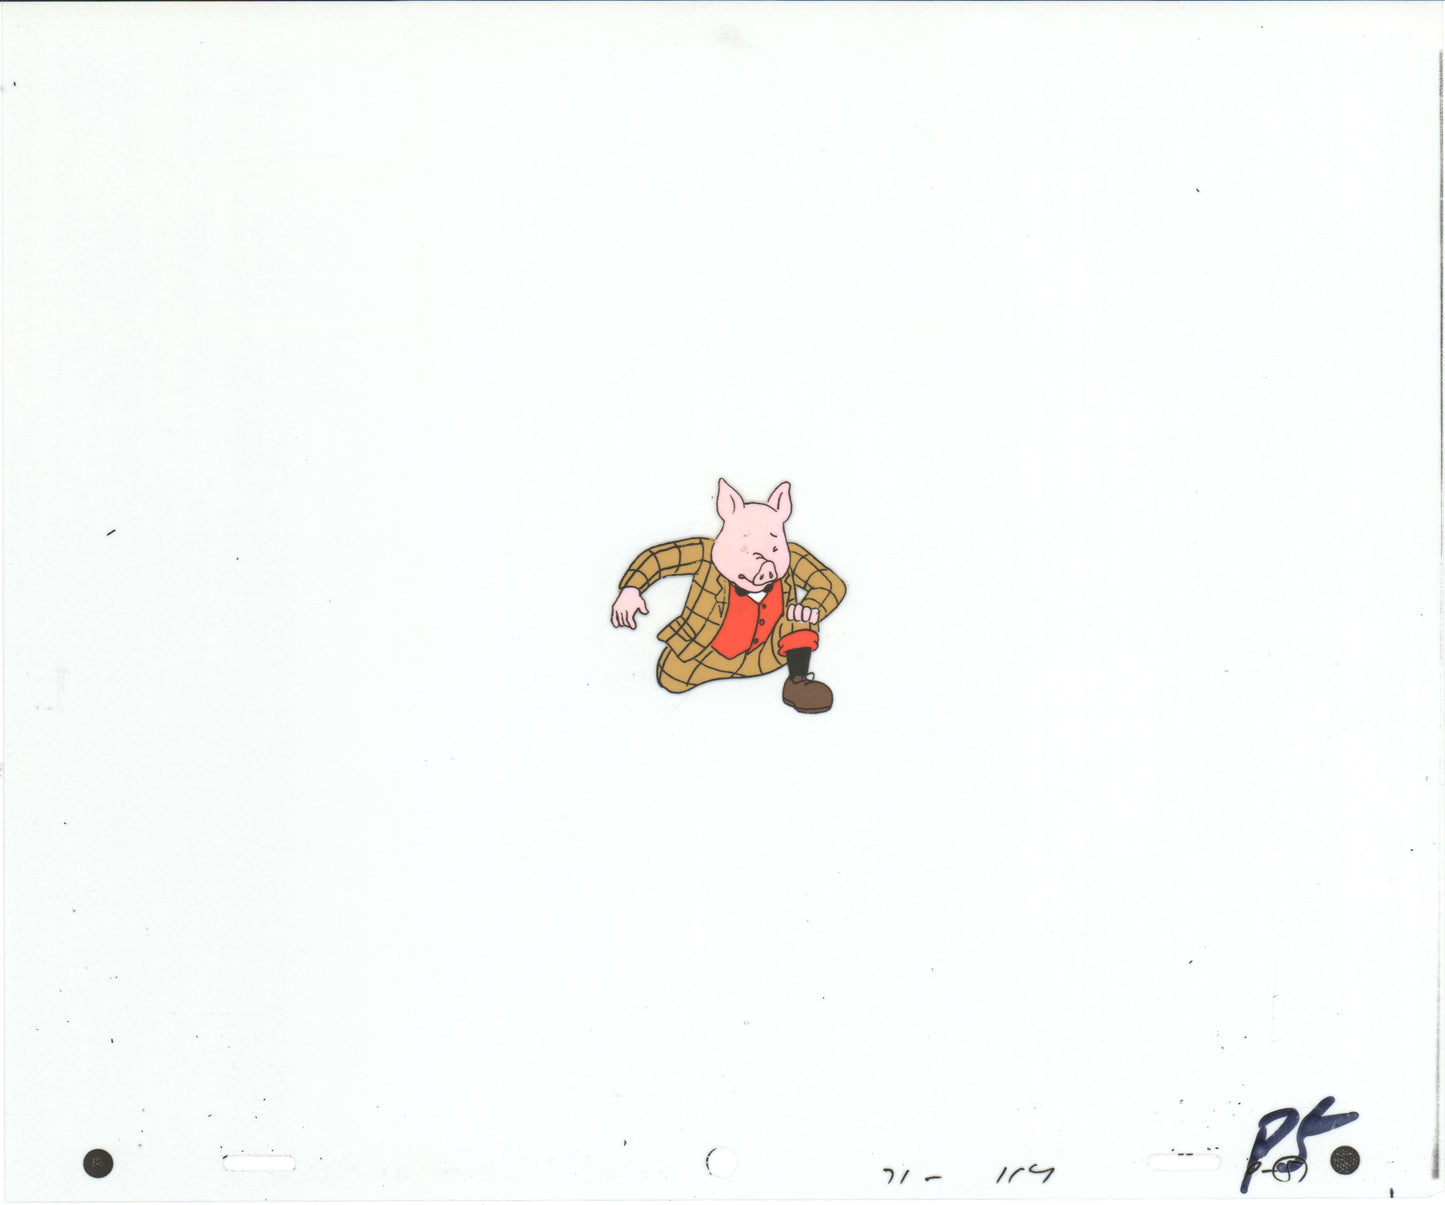 RUPERT Bear Podgy Pig Original Production Animation Cel from the Cartoon by Nelvana Tourtel Animation 1990s 8-340